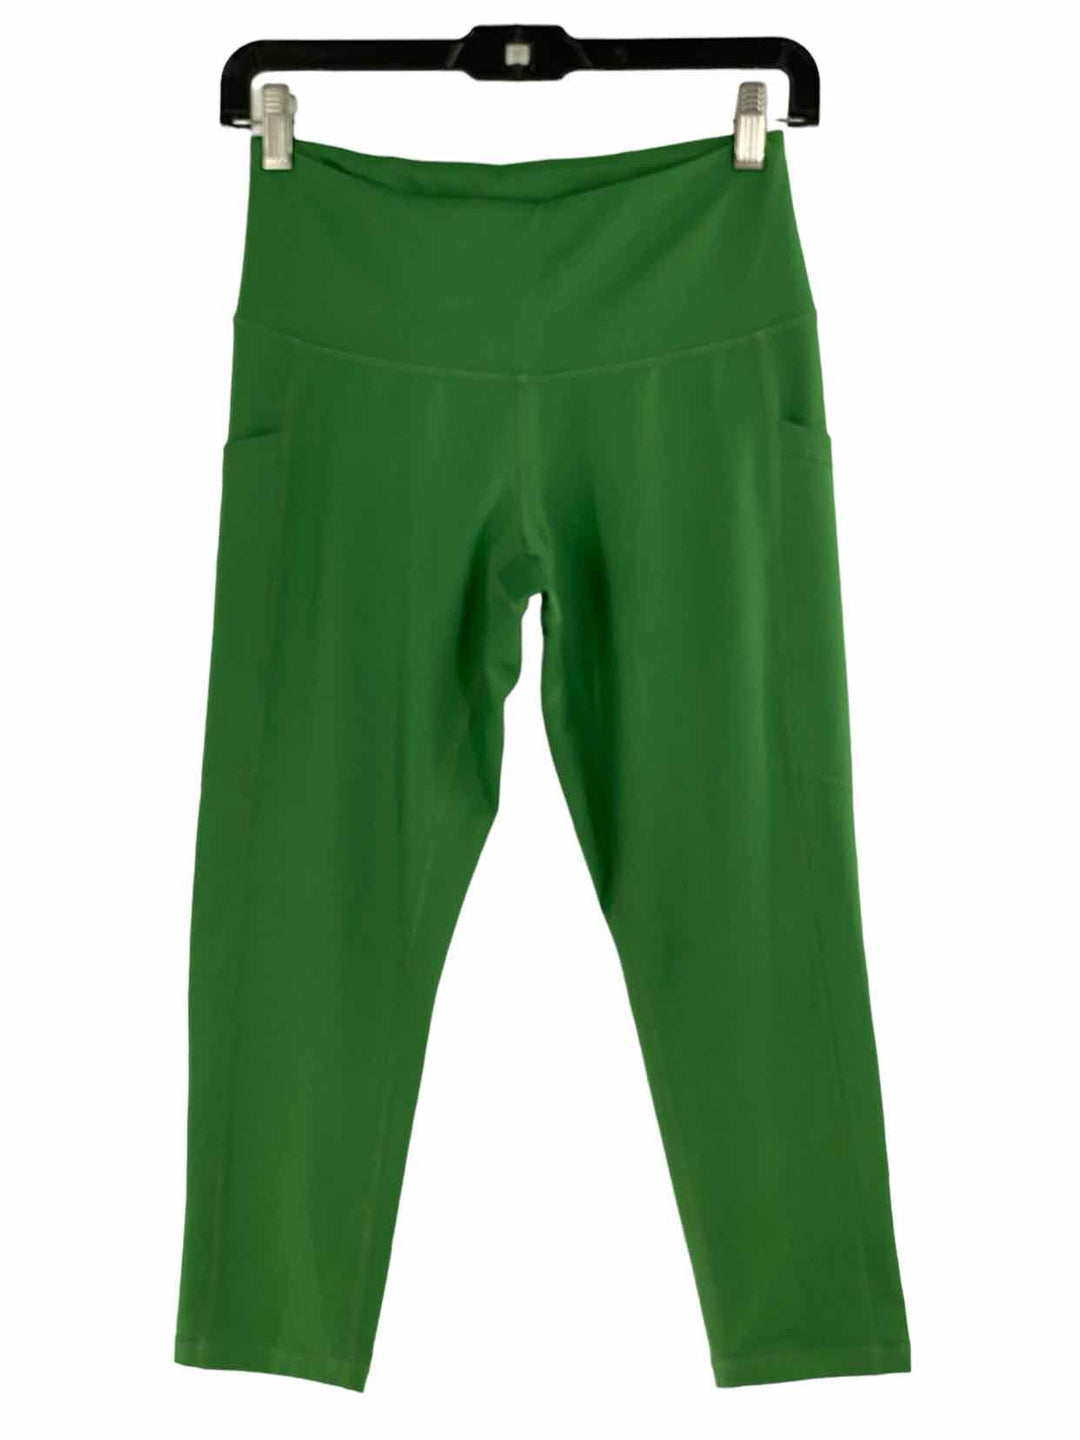 Zella Size S Green Athletic Pants